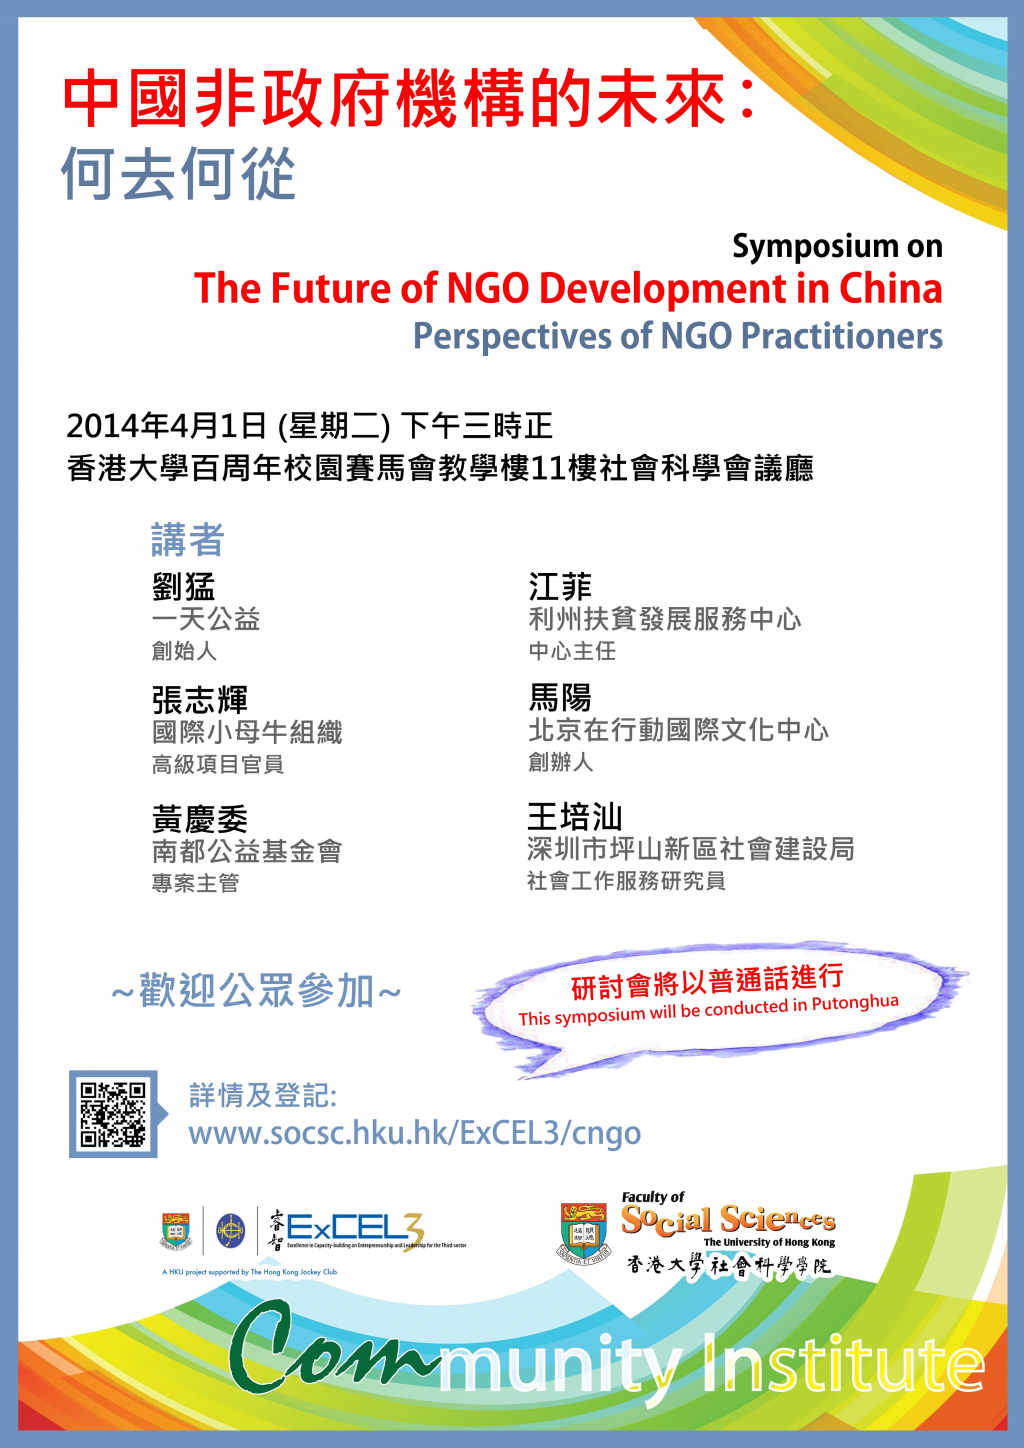 Symposium on the Future of NGO Development in China